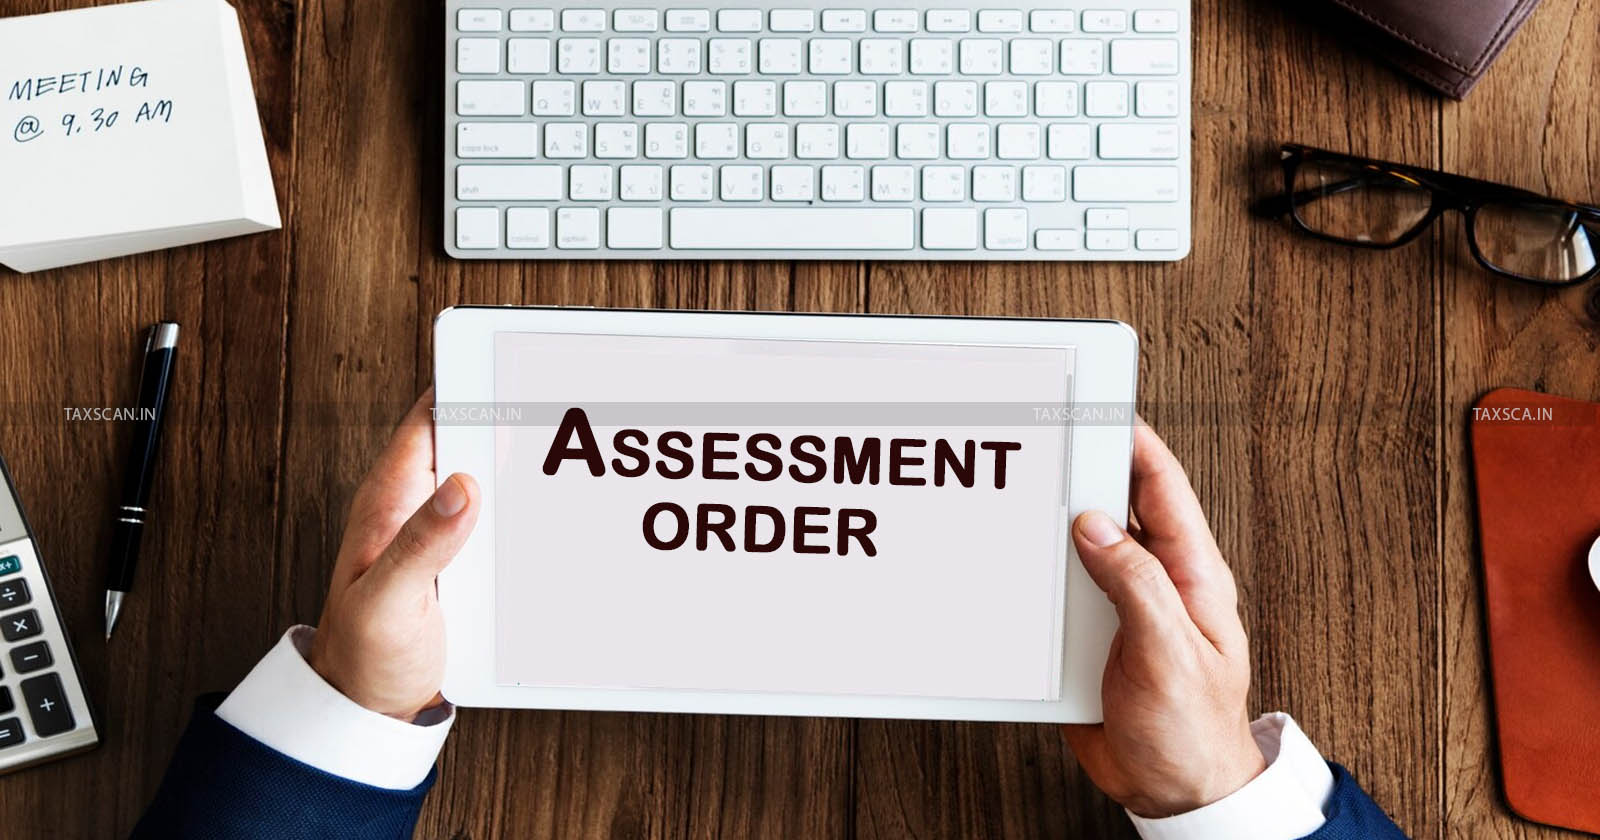 ITAT - Assessment order - ITAT Quashes Assessment order - deceased assessee - taxscan